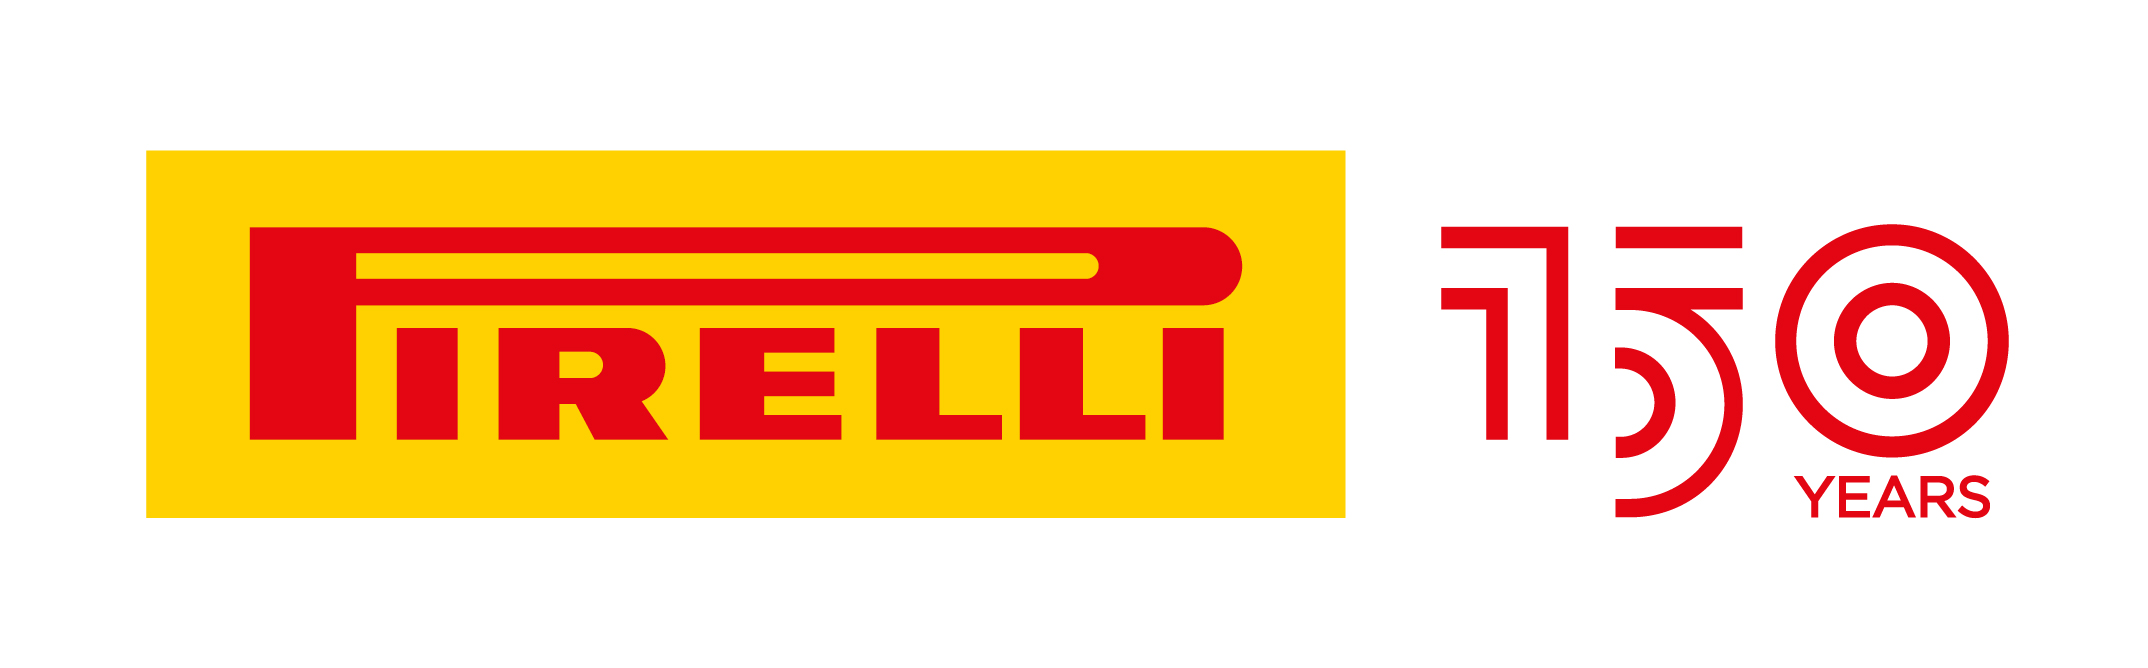 Logo Pirelli 150 anni